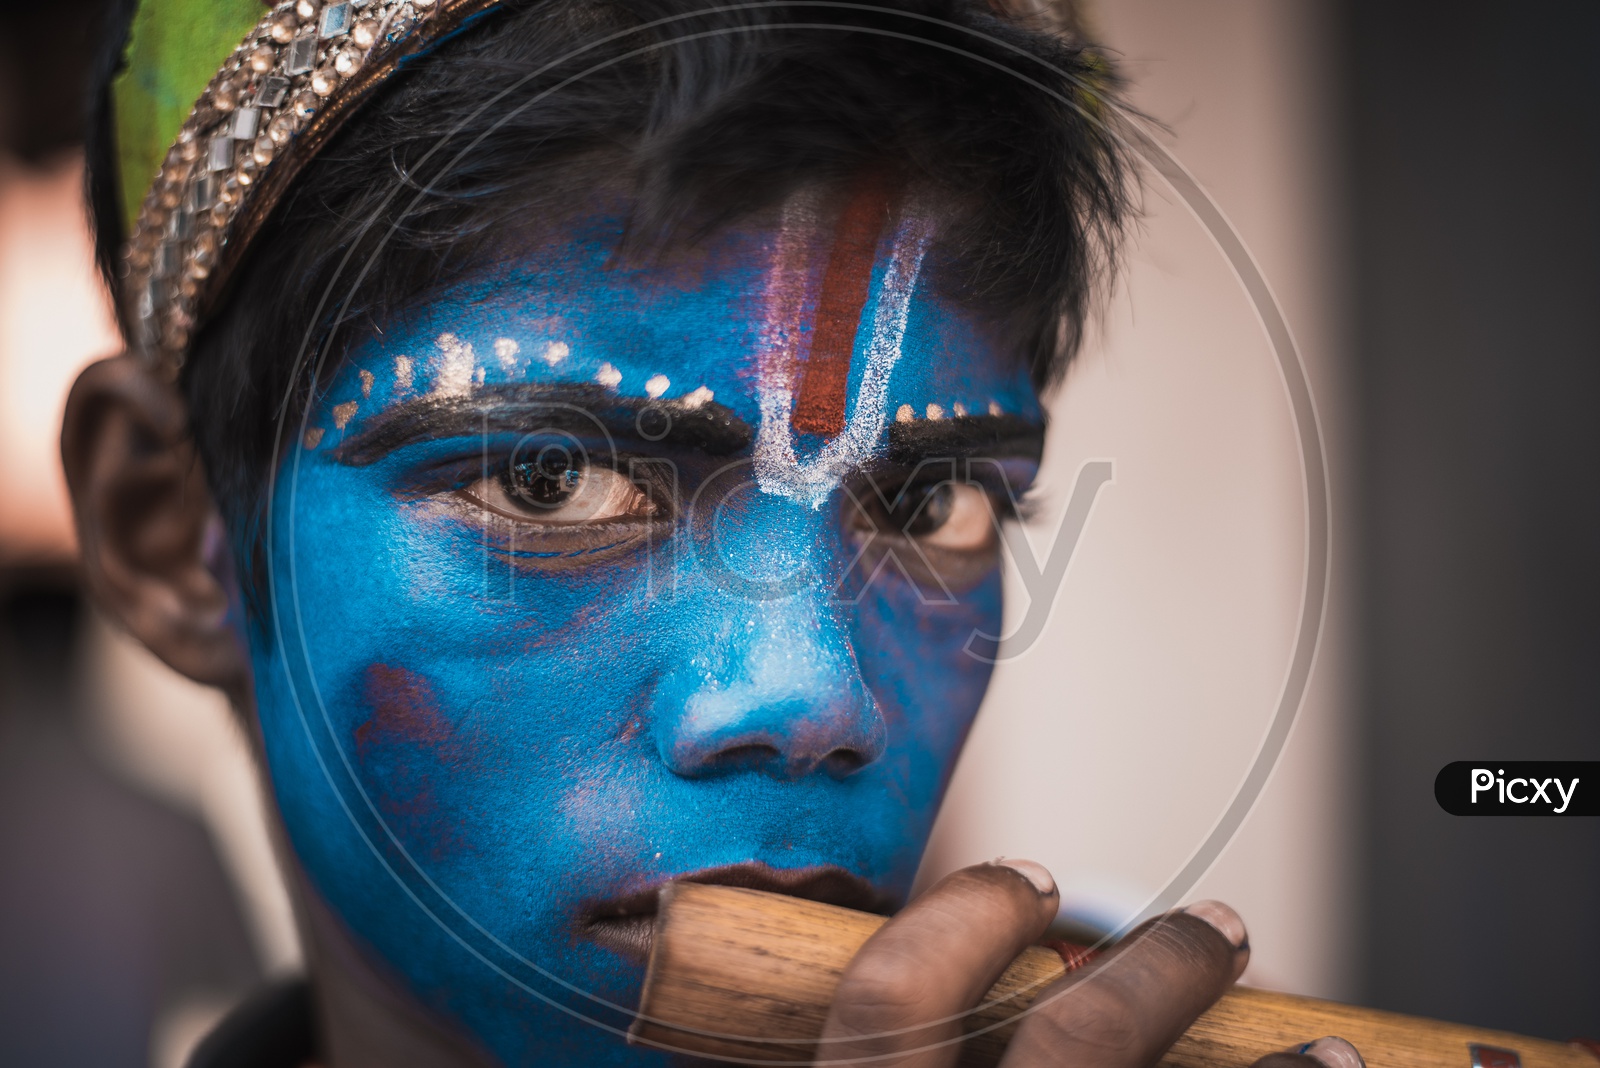 A boy wearing krishna makeup